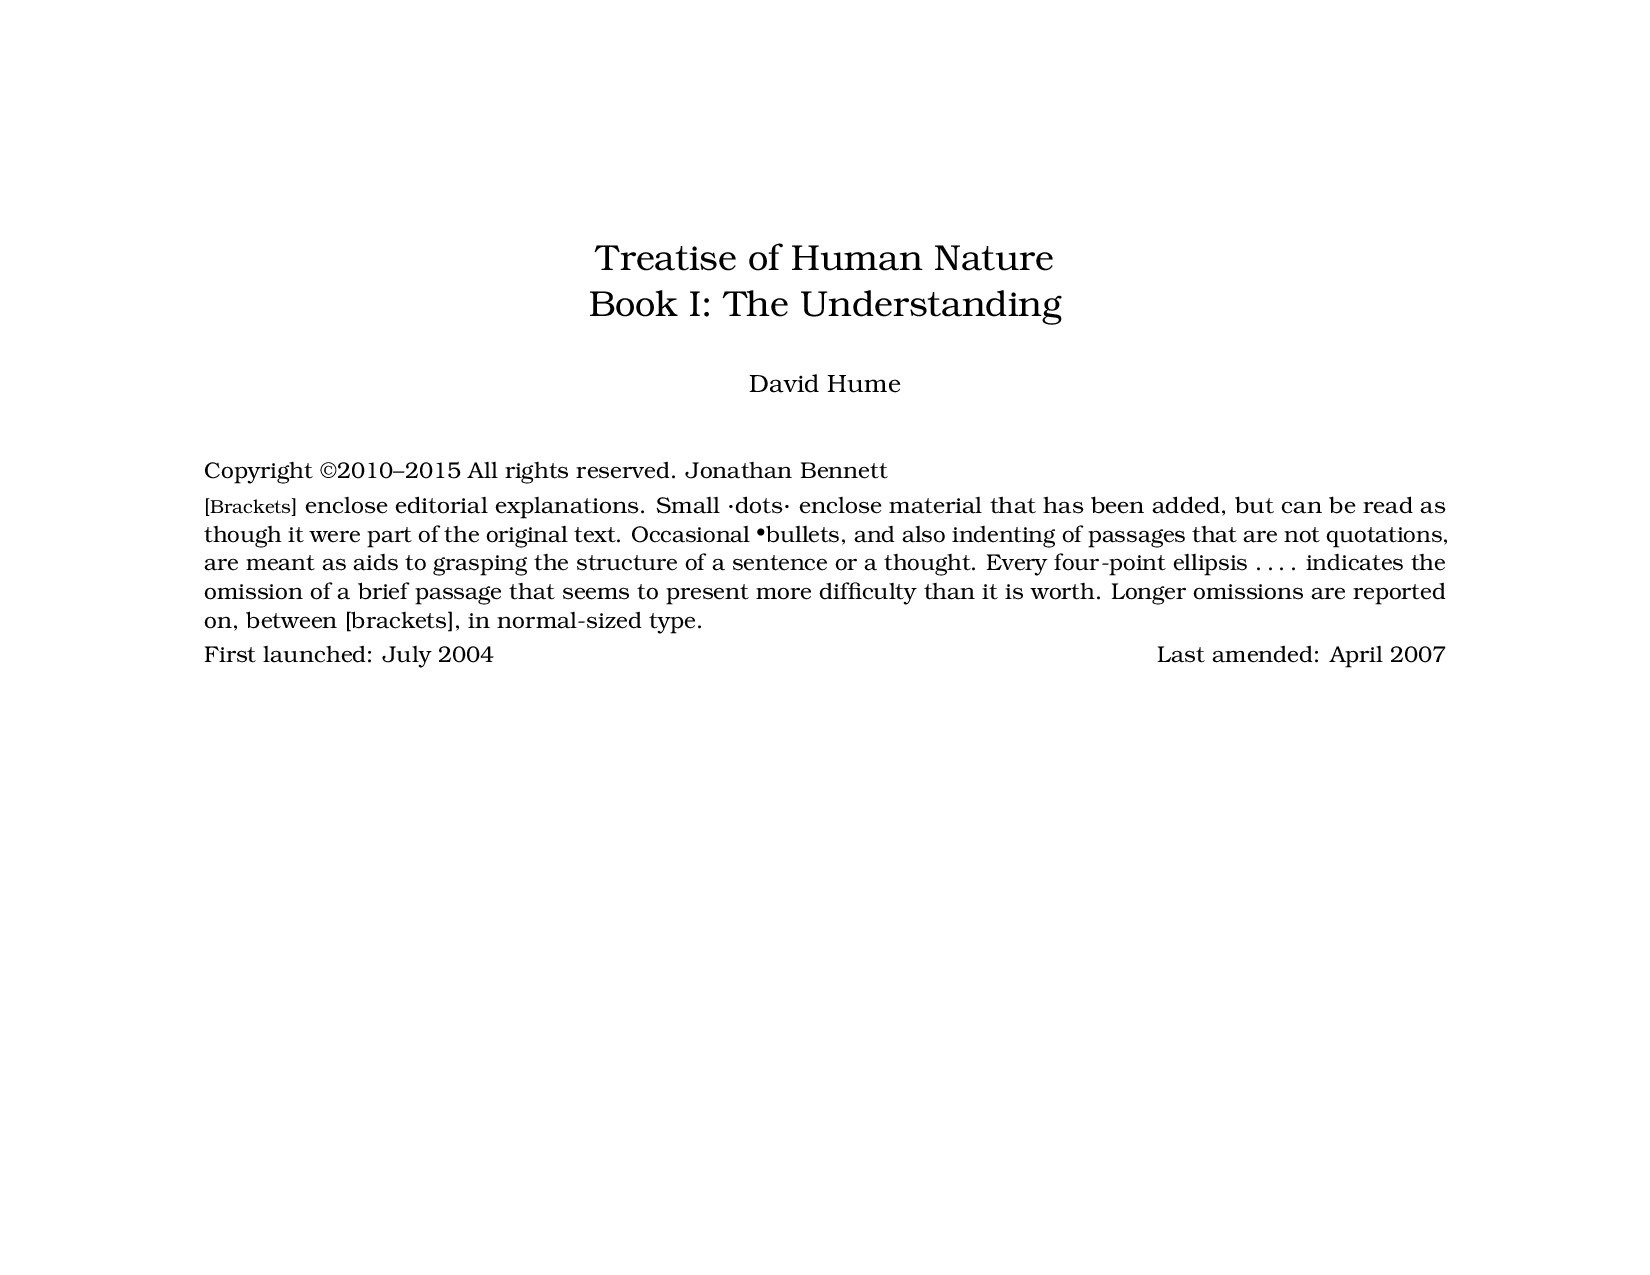 David Hume - Treatise of Human Nature Book 1; The Understanding